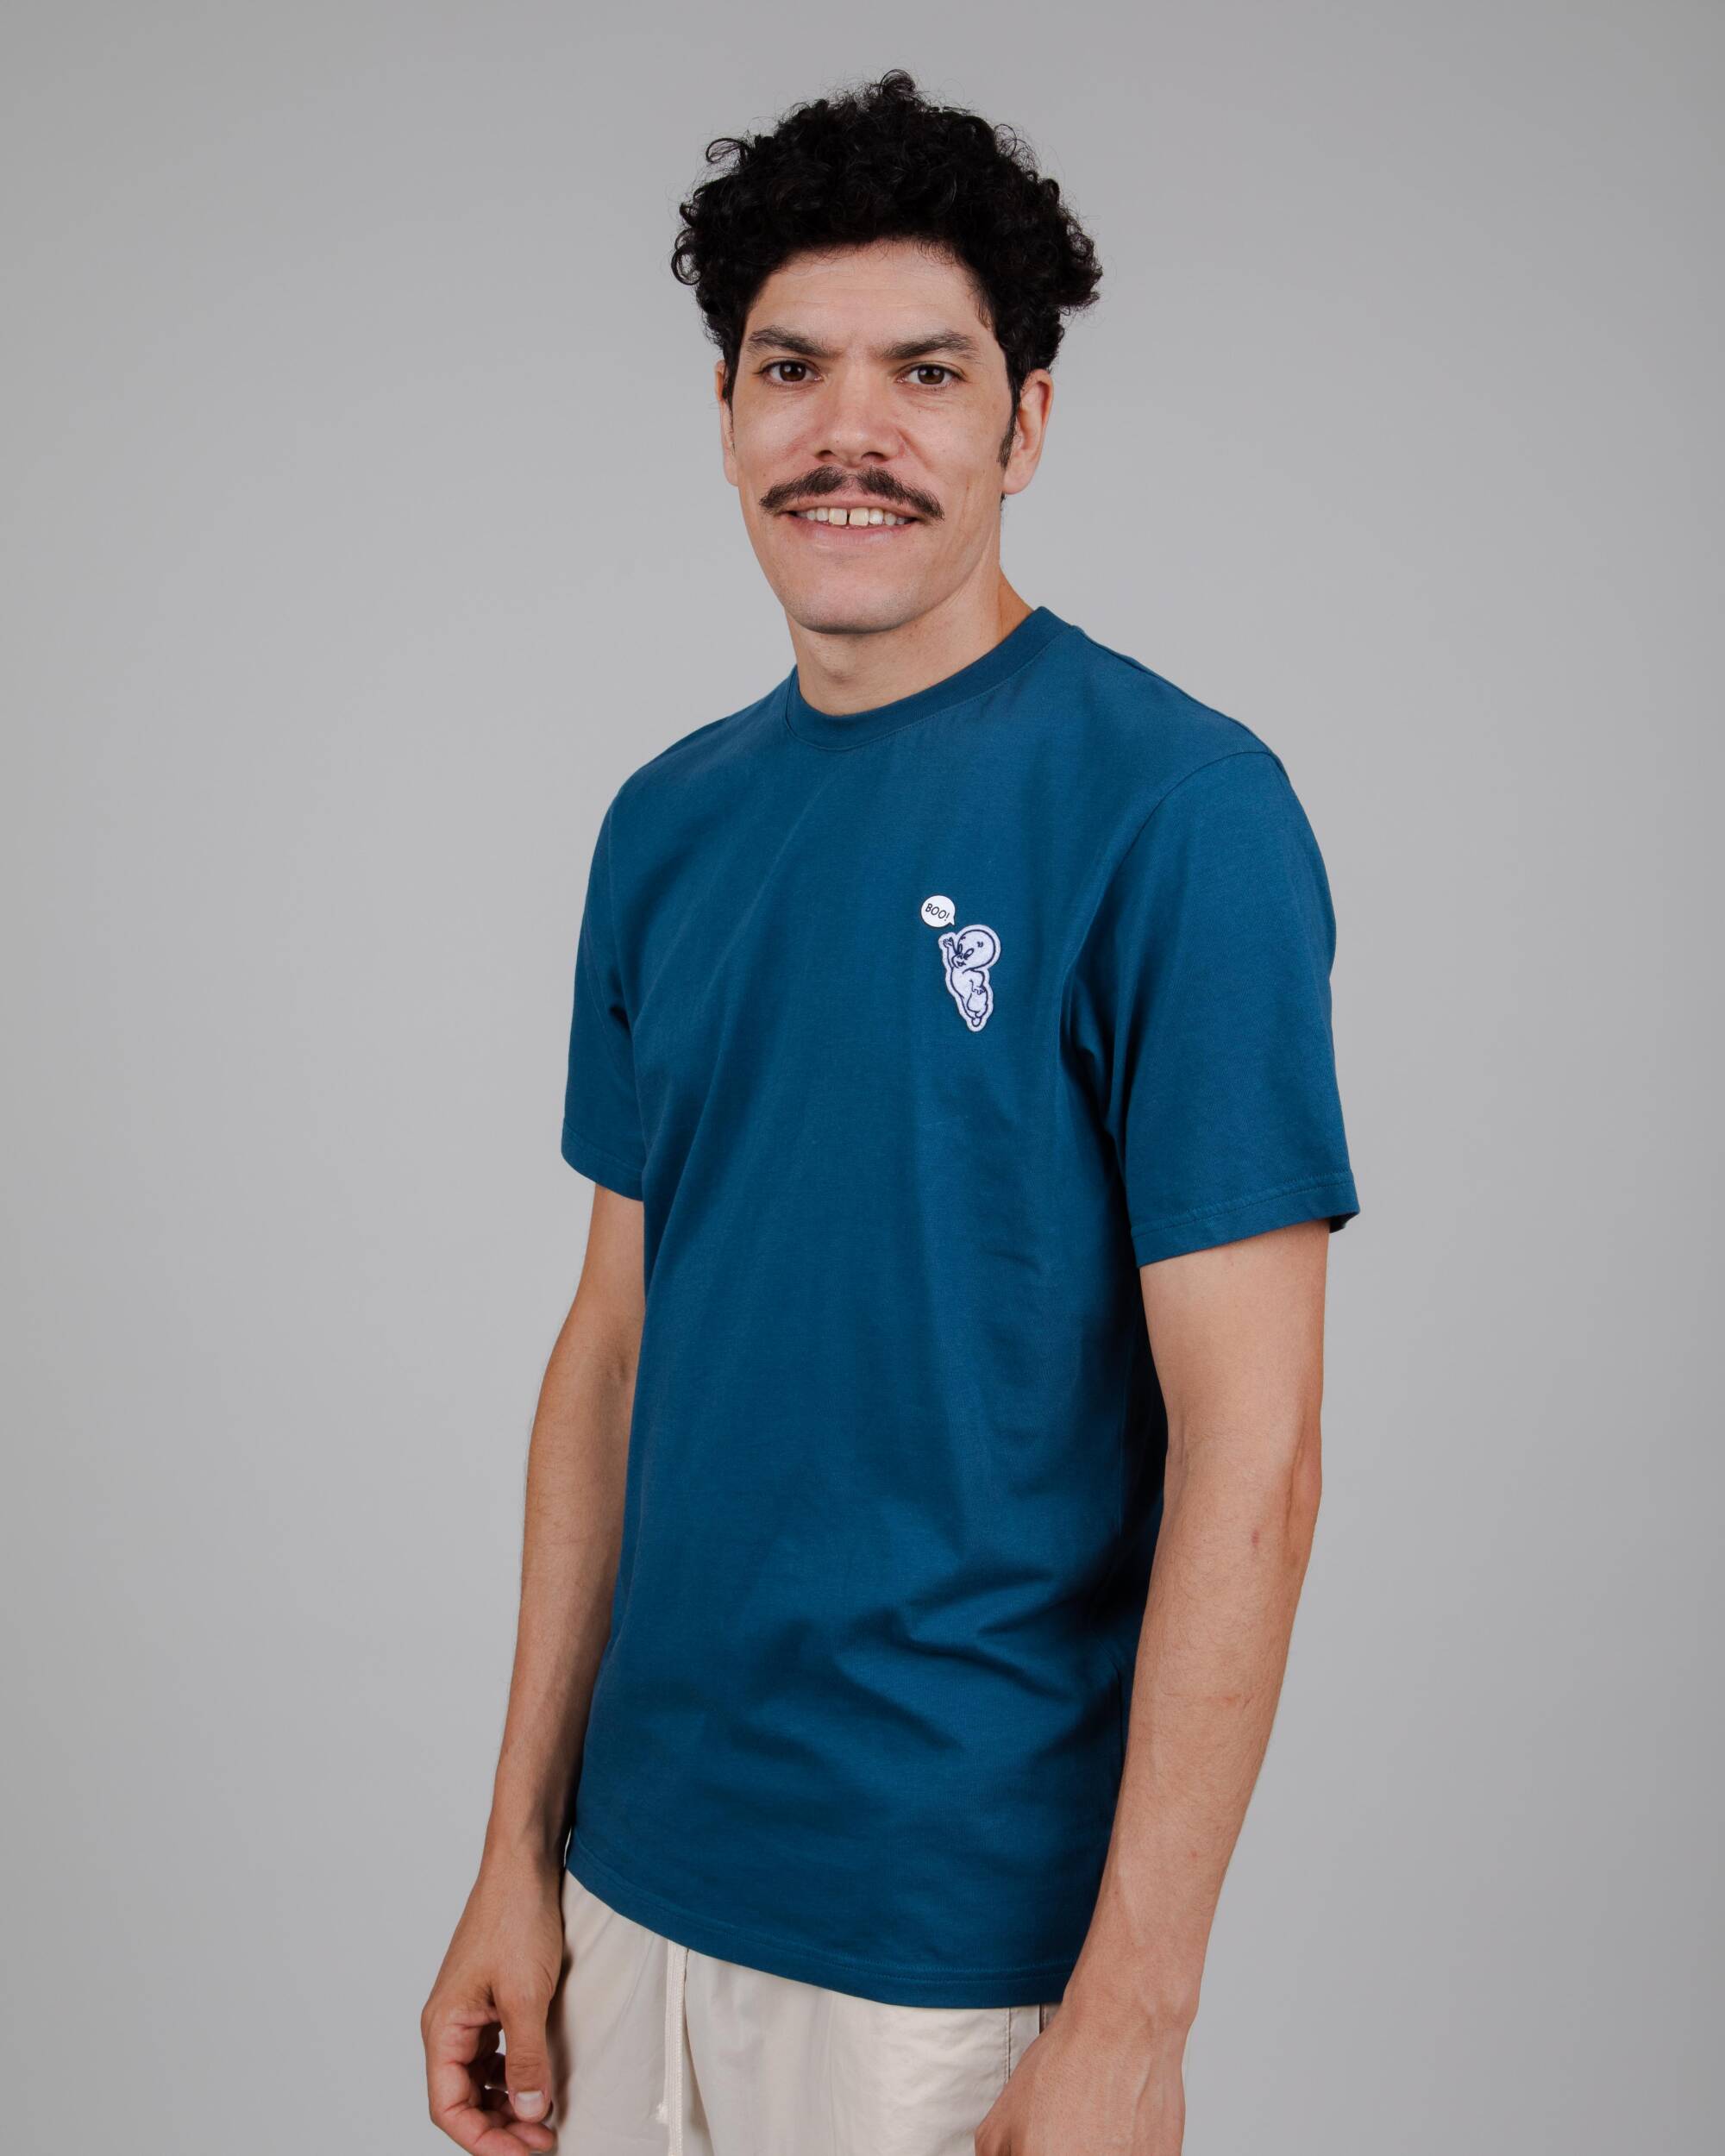 Casper Patch Unisex T-Shirt